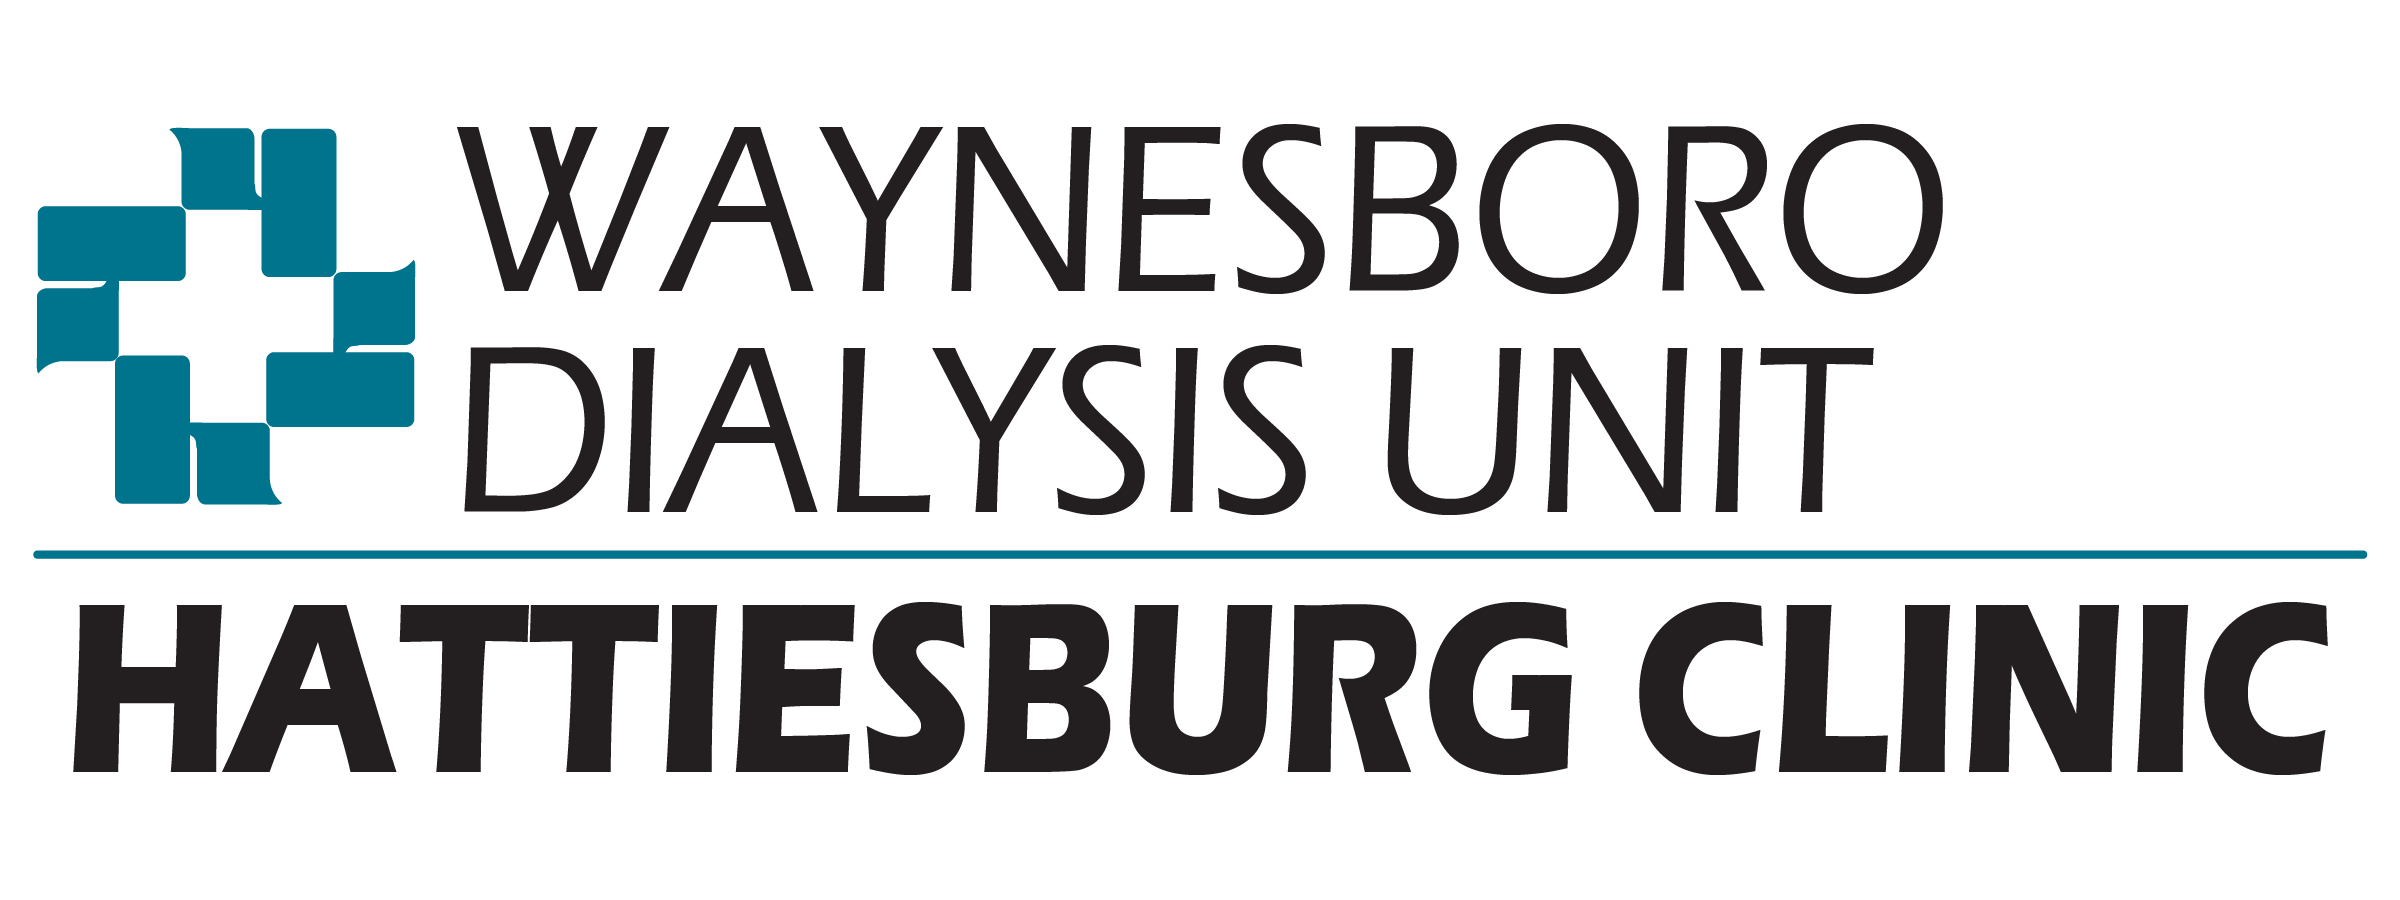 Waynesboro Dialysis Unit logo